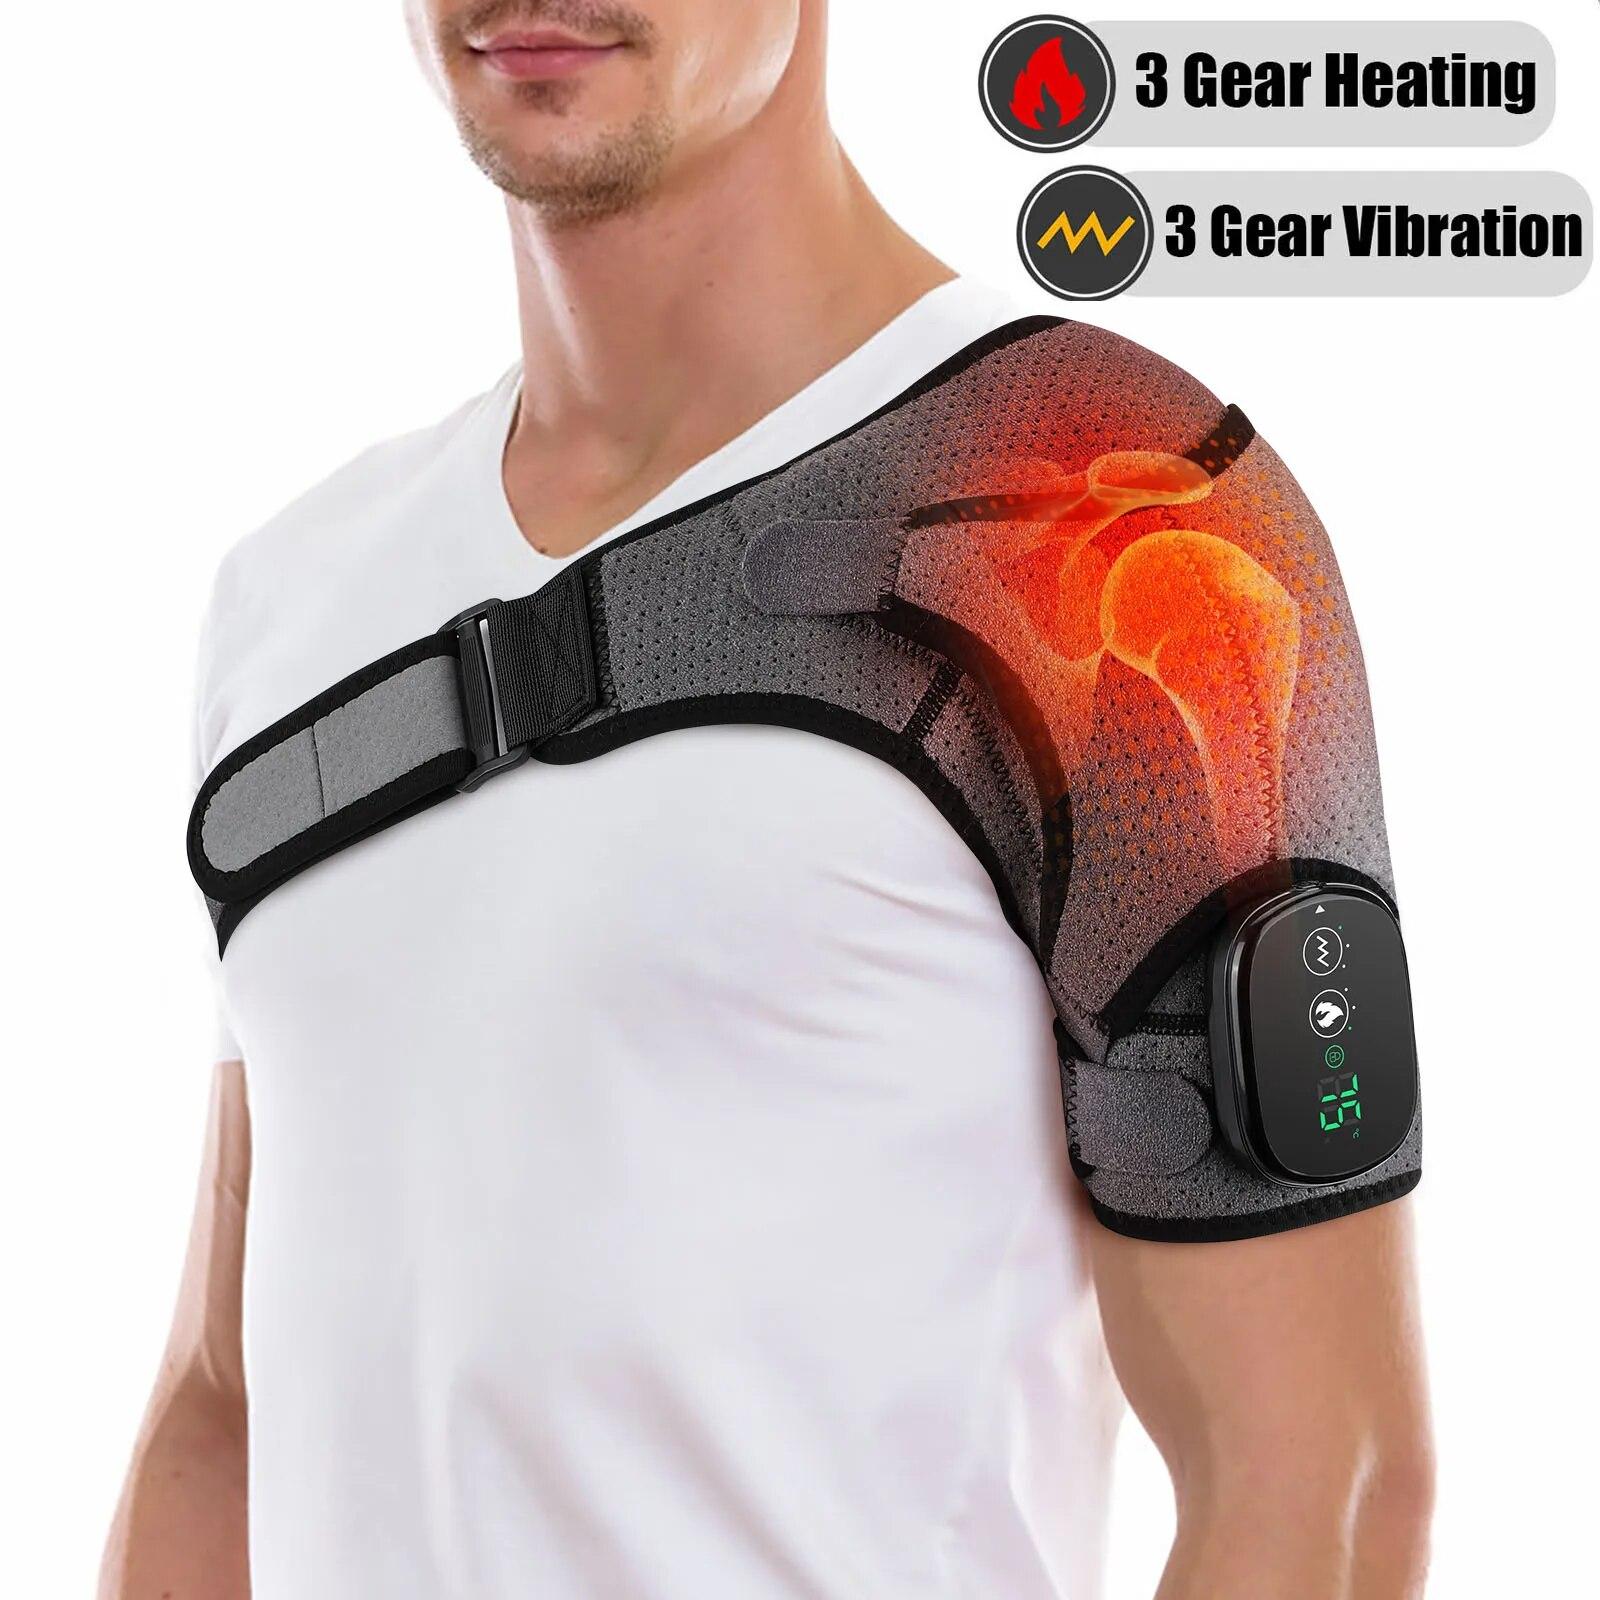 Binchi Outdoor Equipment Electric Heating Shoulder Massage Belt Pad Vibration Shoulder Massage Pad Support Brace Arthritis Joint Pain Relief Health Care